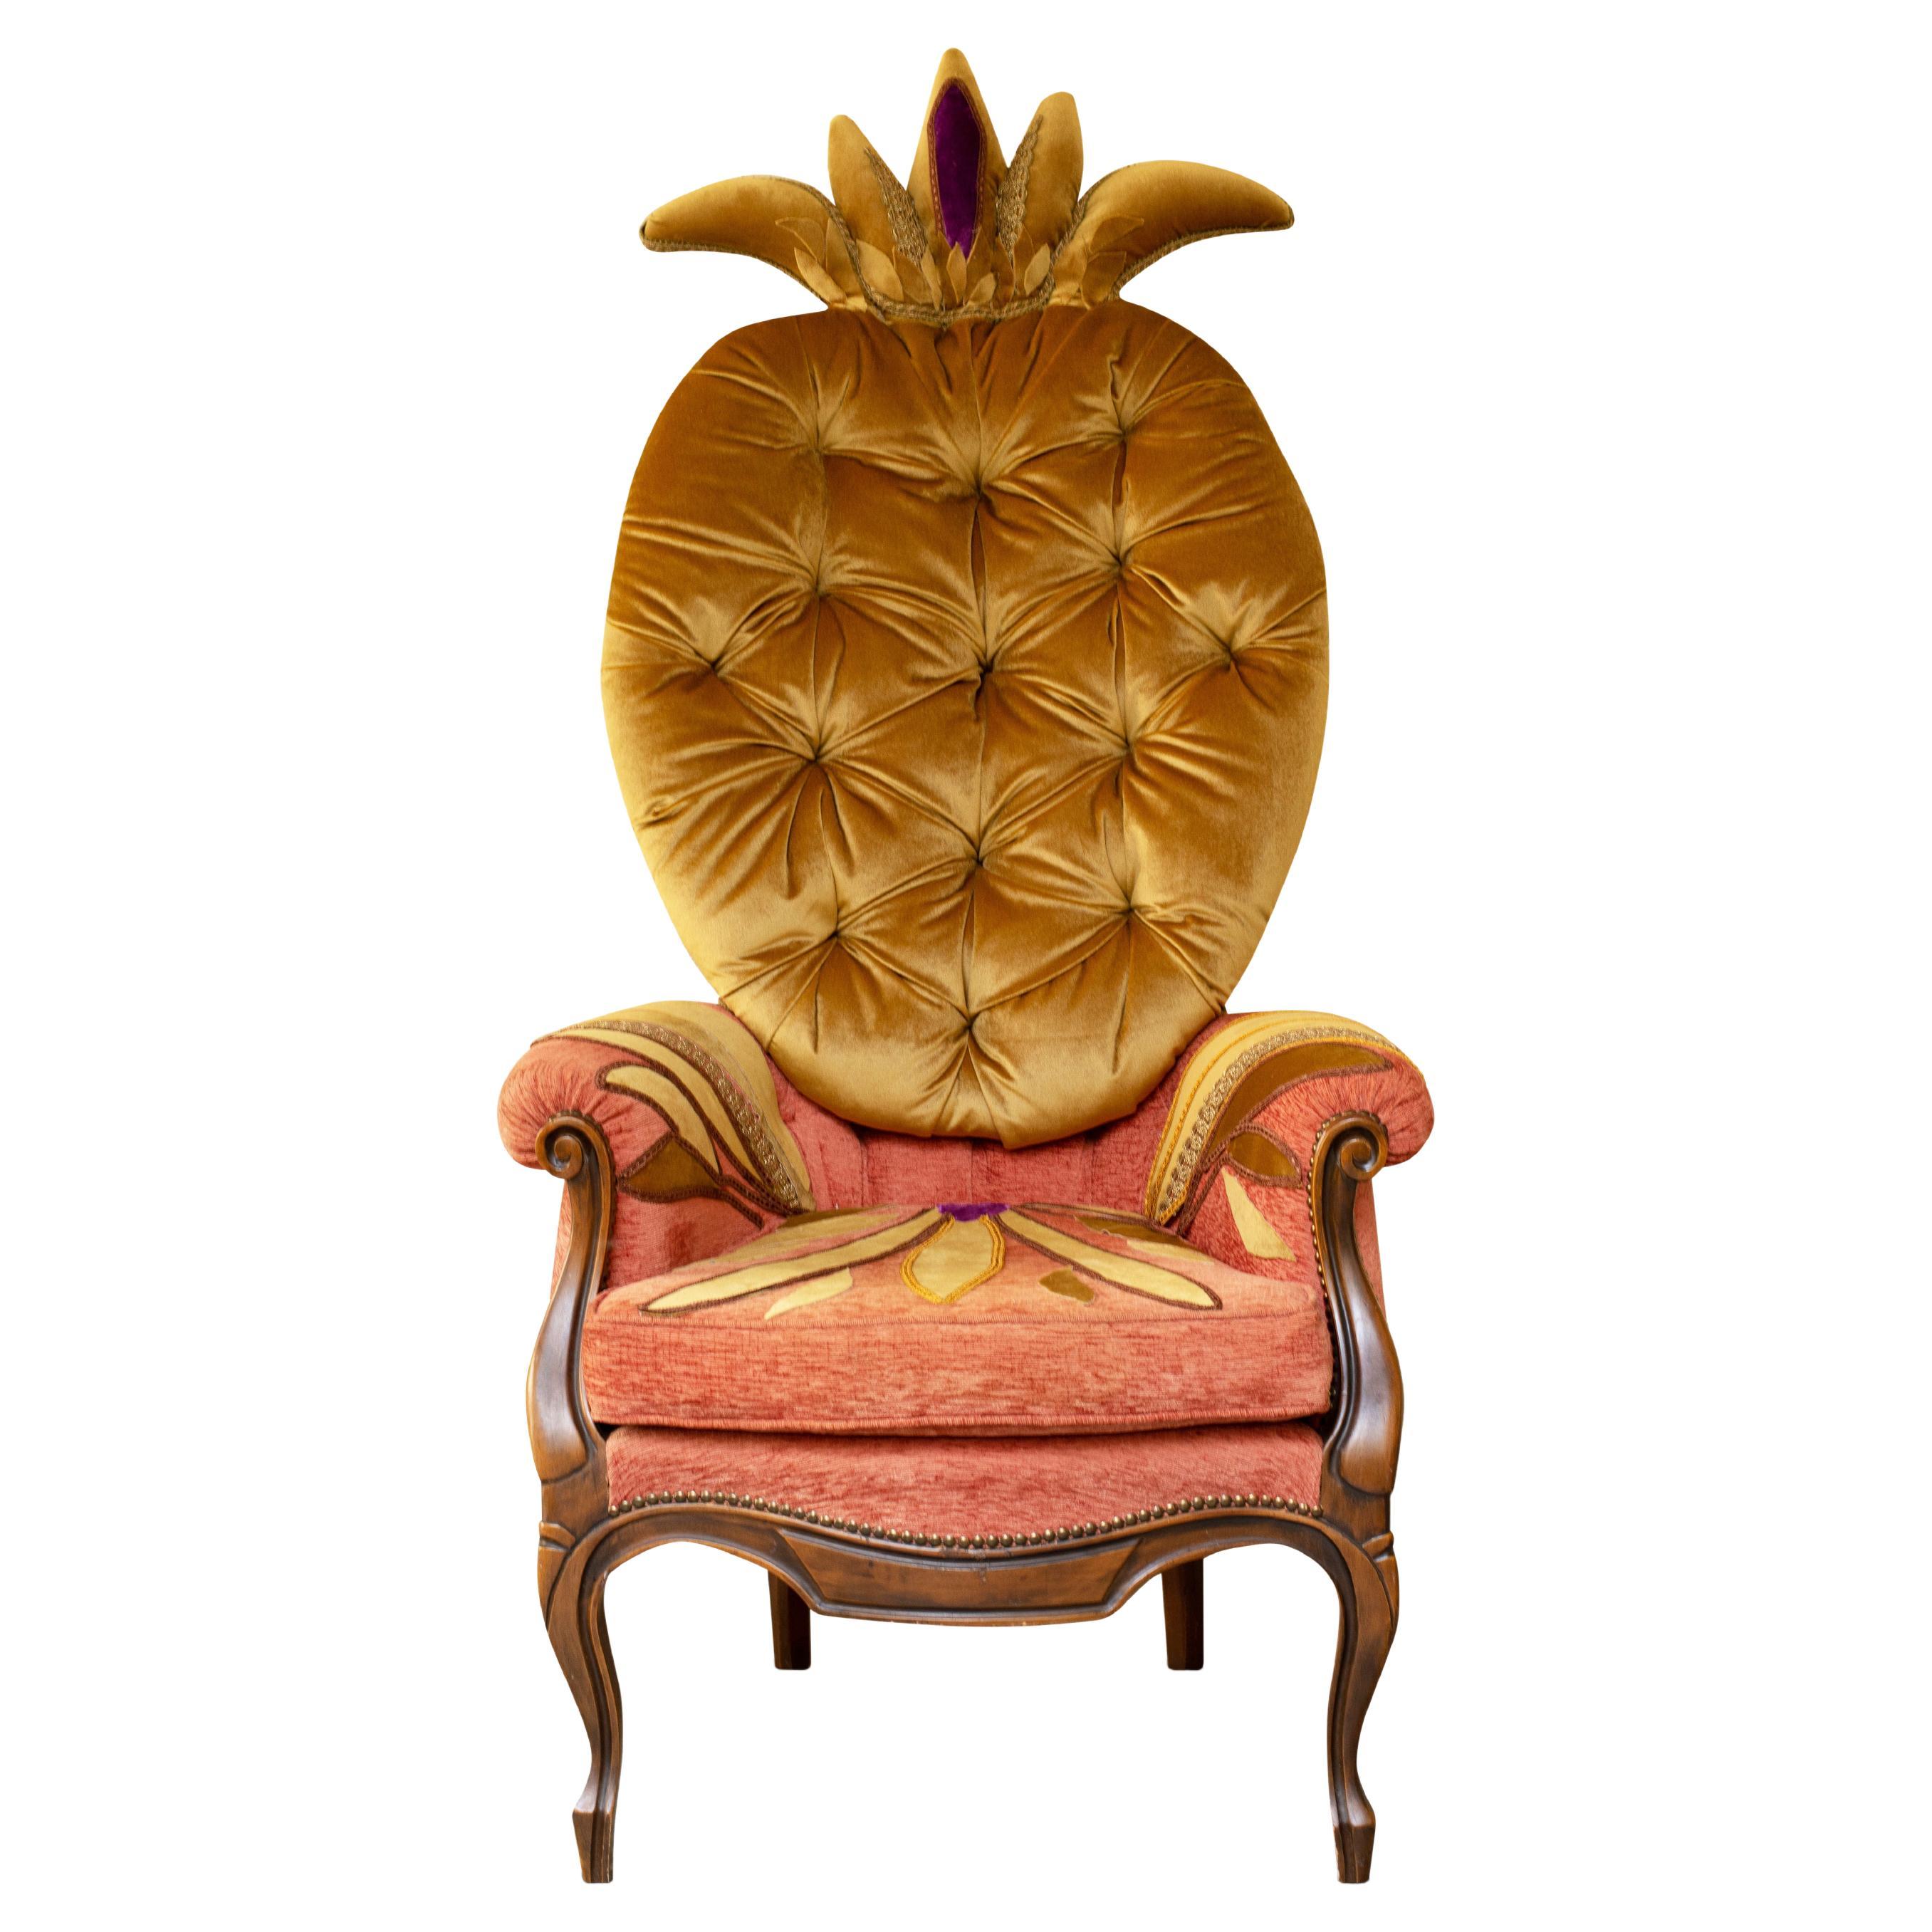 Contemporary Art Armchair - Gelbe Ananas von Carla Tolomeo im Angebot